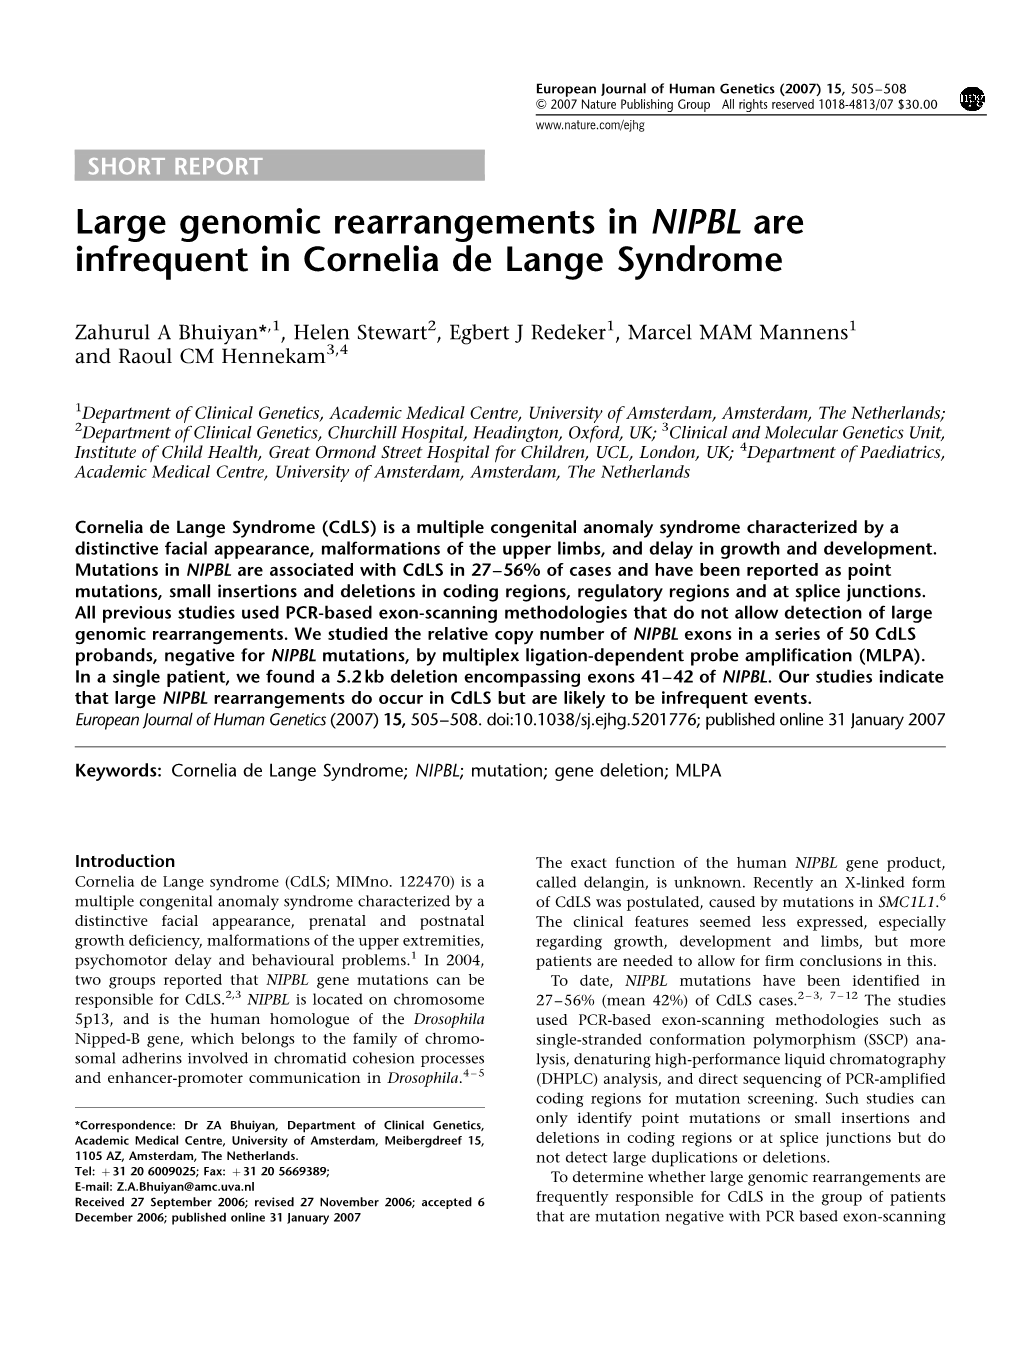 Large Genomic Rearrangements in NIPBL Are Infrequent in Cornelia De Lange Syndrome